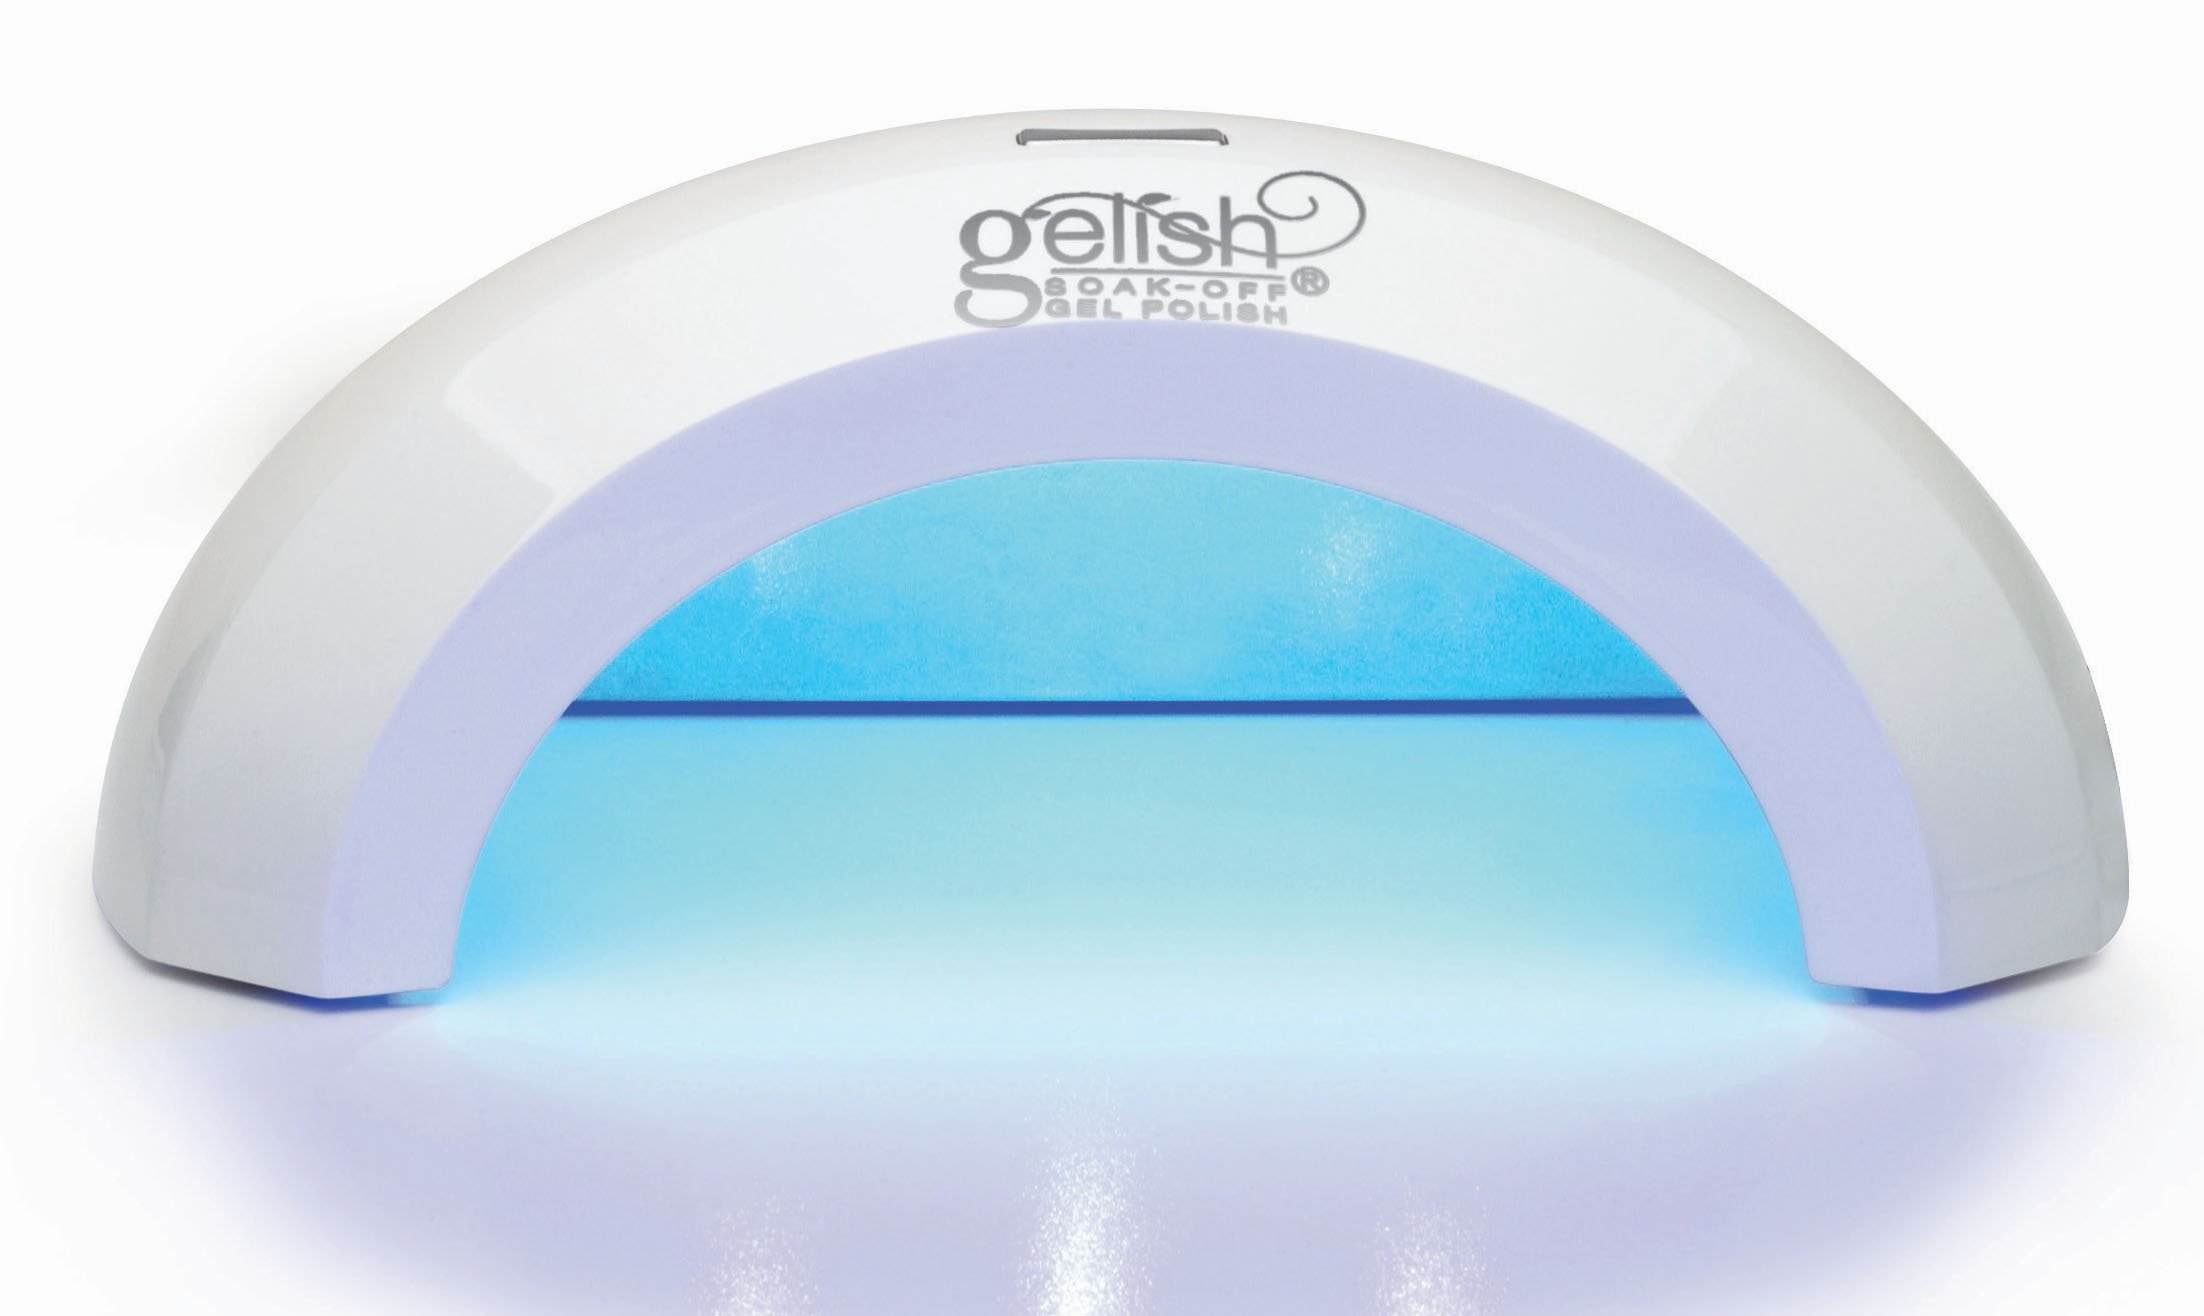 8. Gelish Mini Pro LED Lamp - wide 6